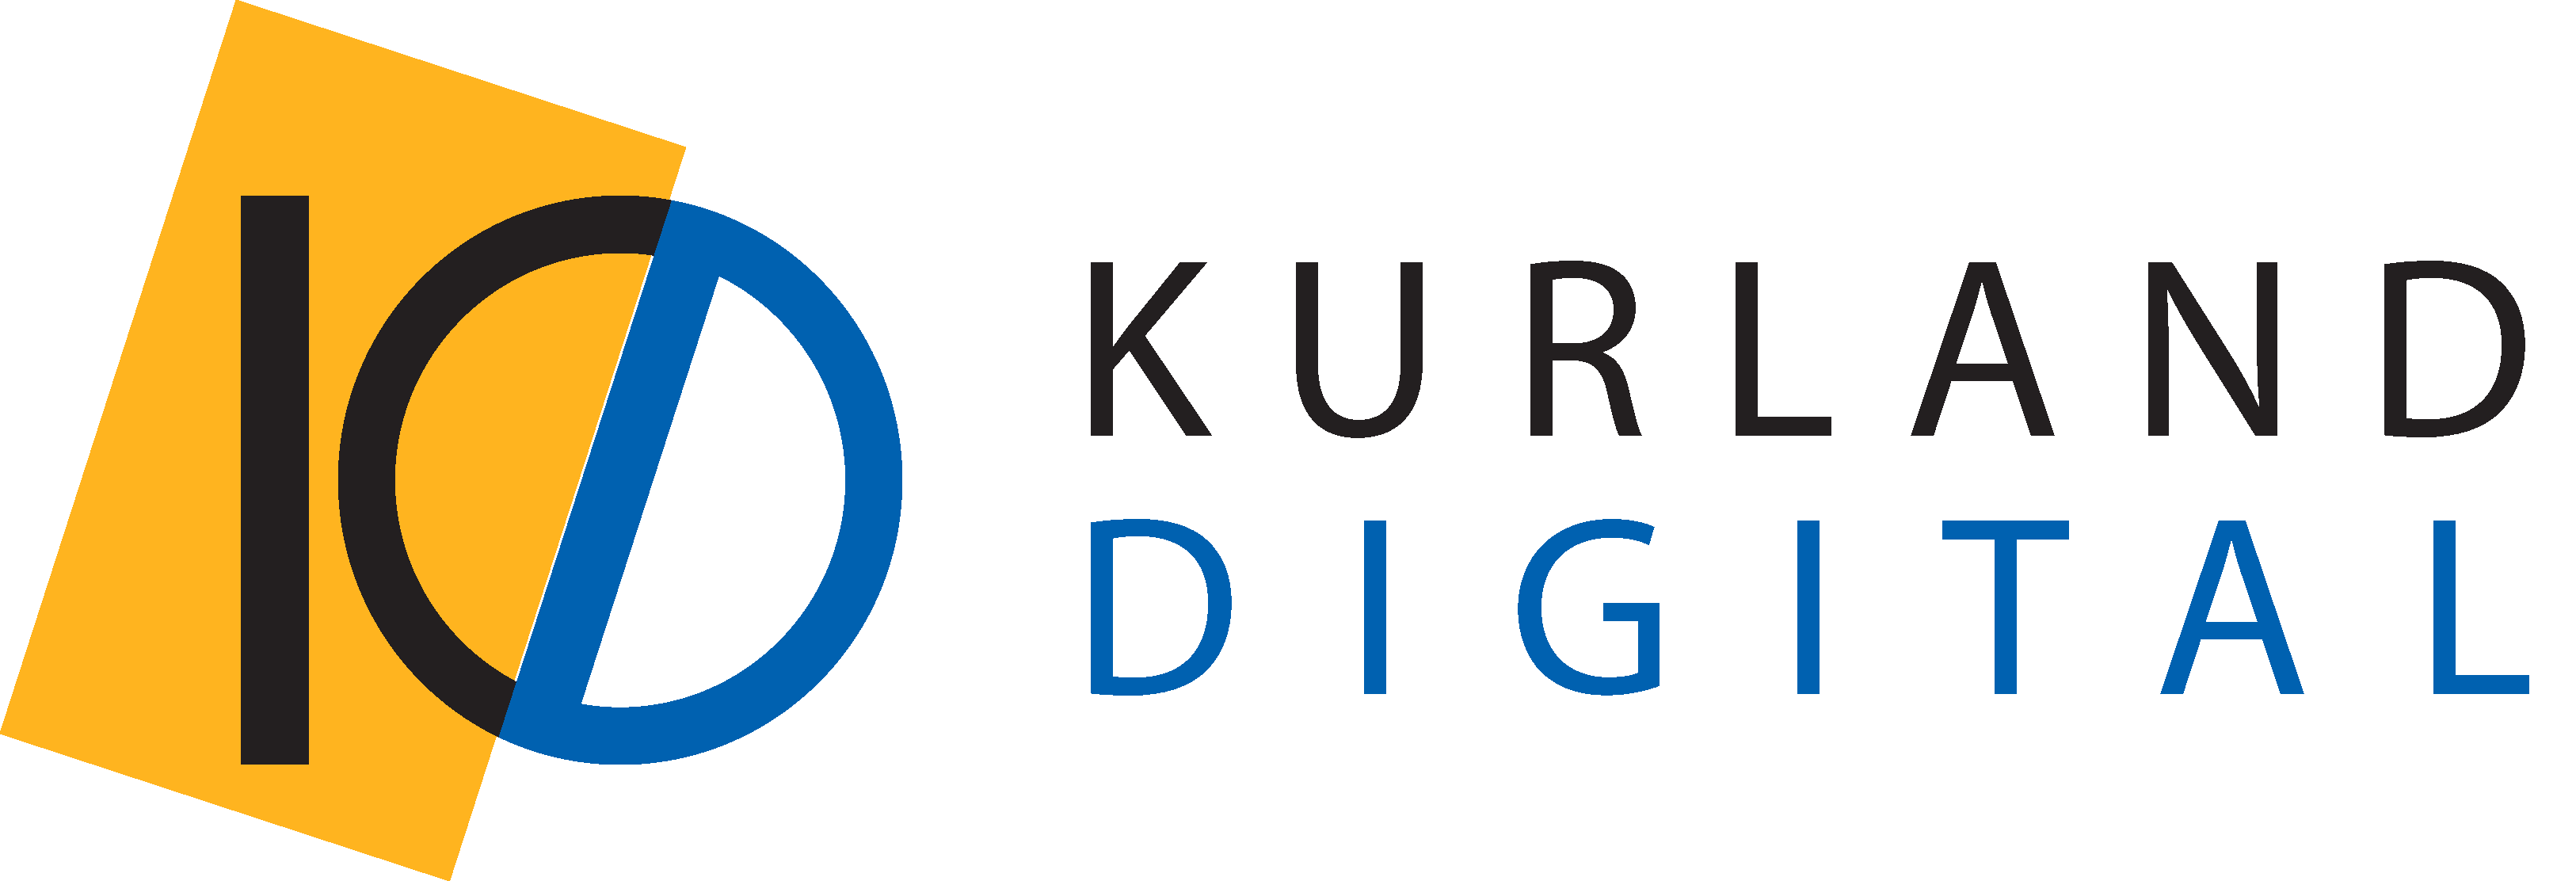 Kurland Digital